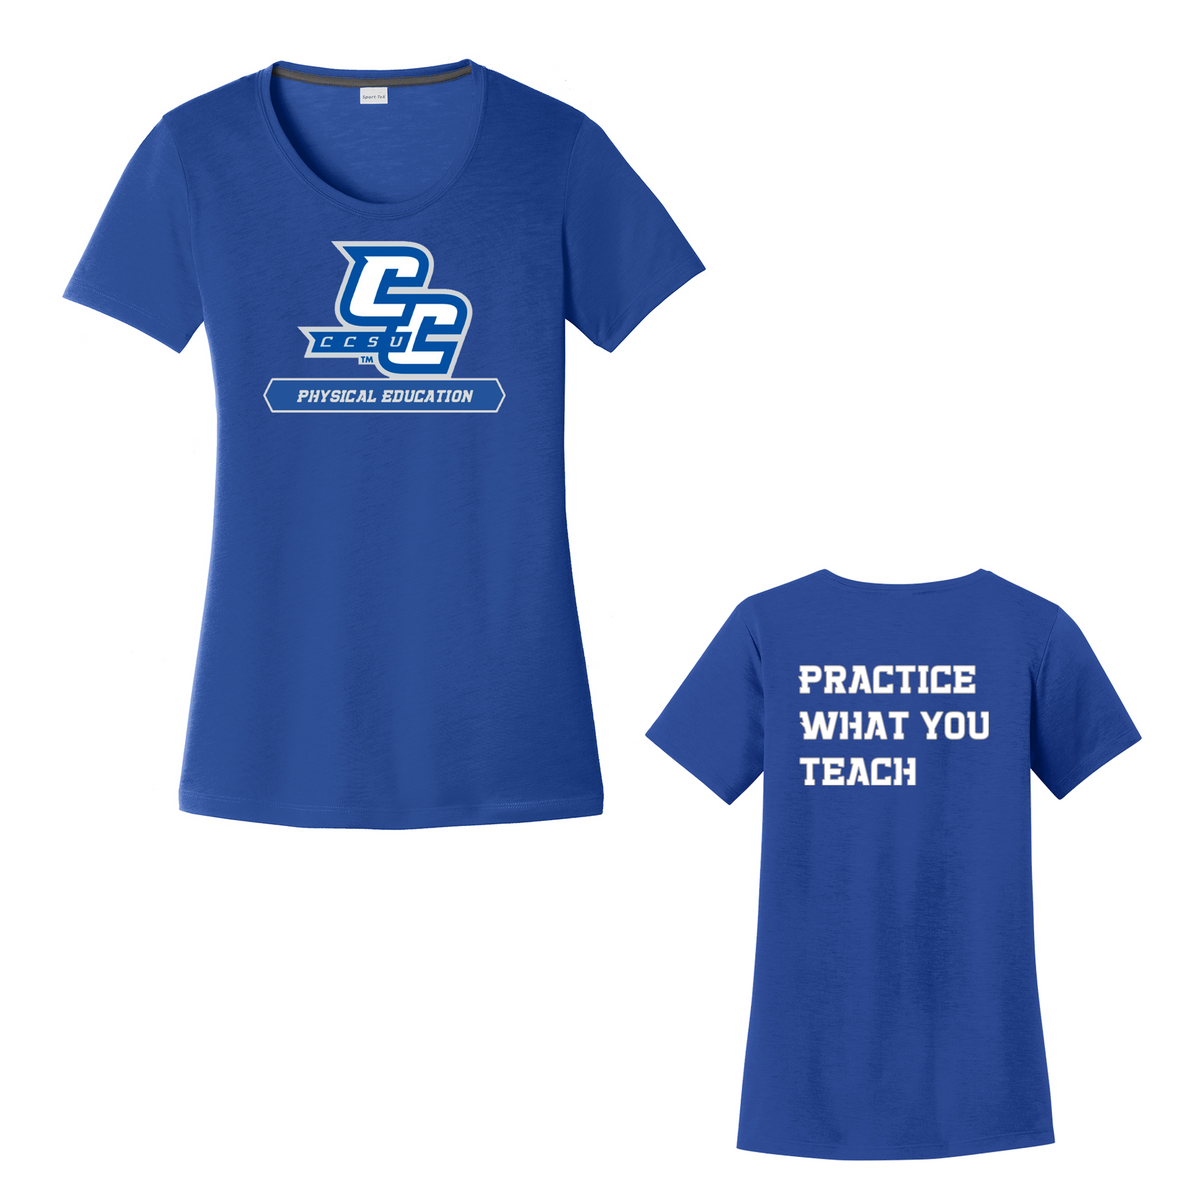 CCSU PE Club Women's CottonTouch Performance T-Shirt